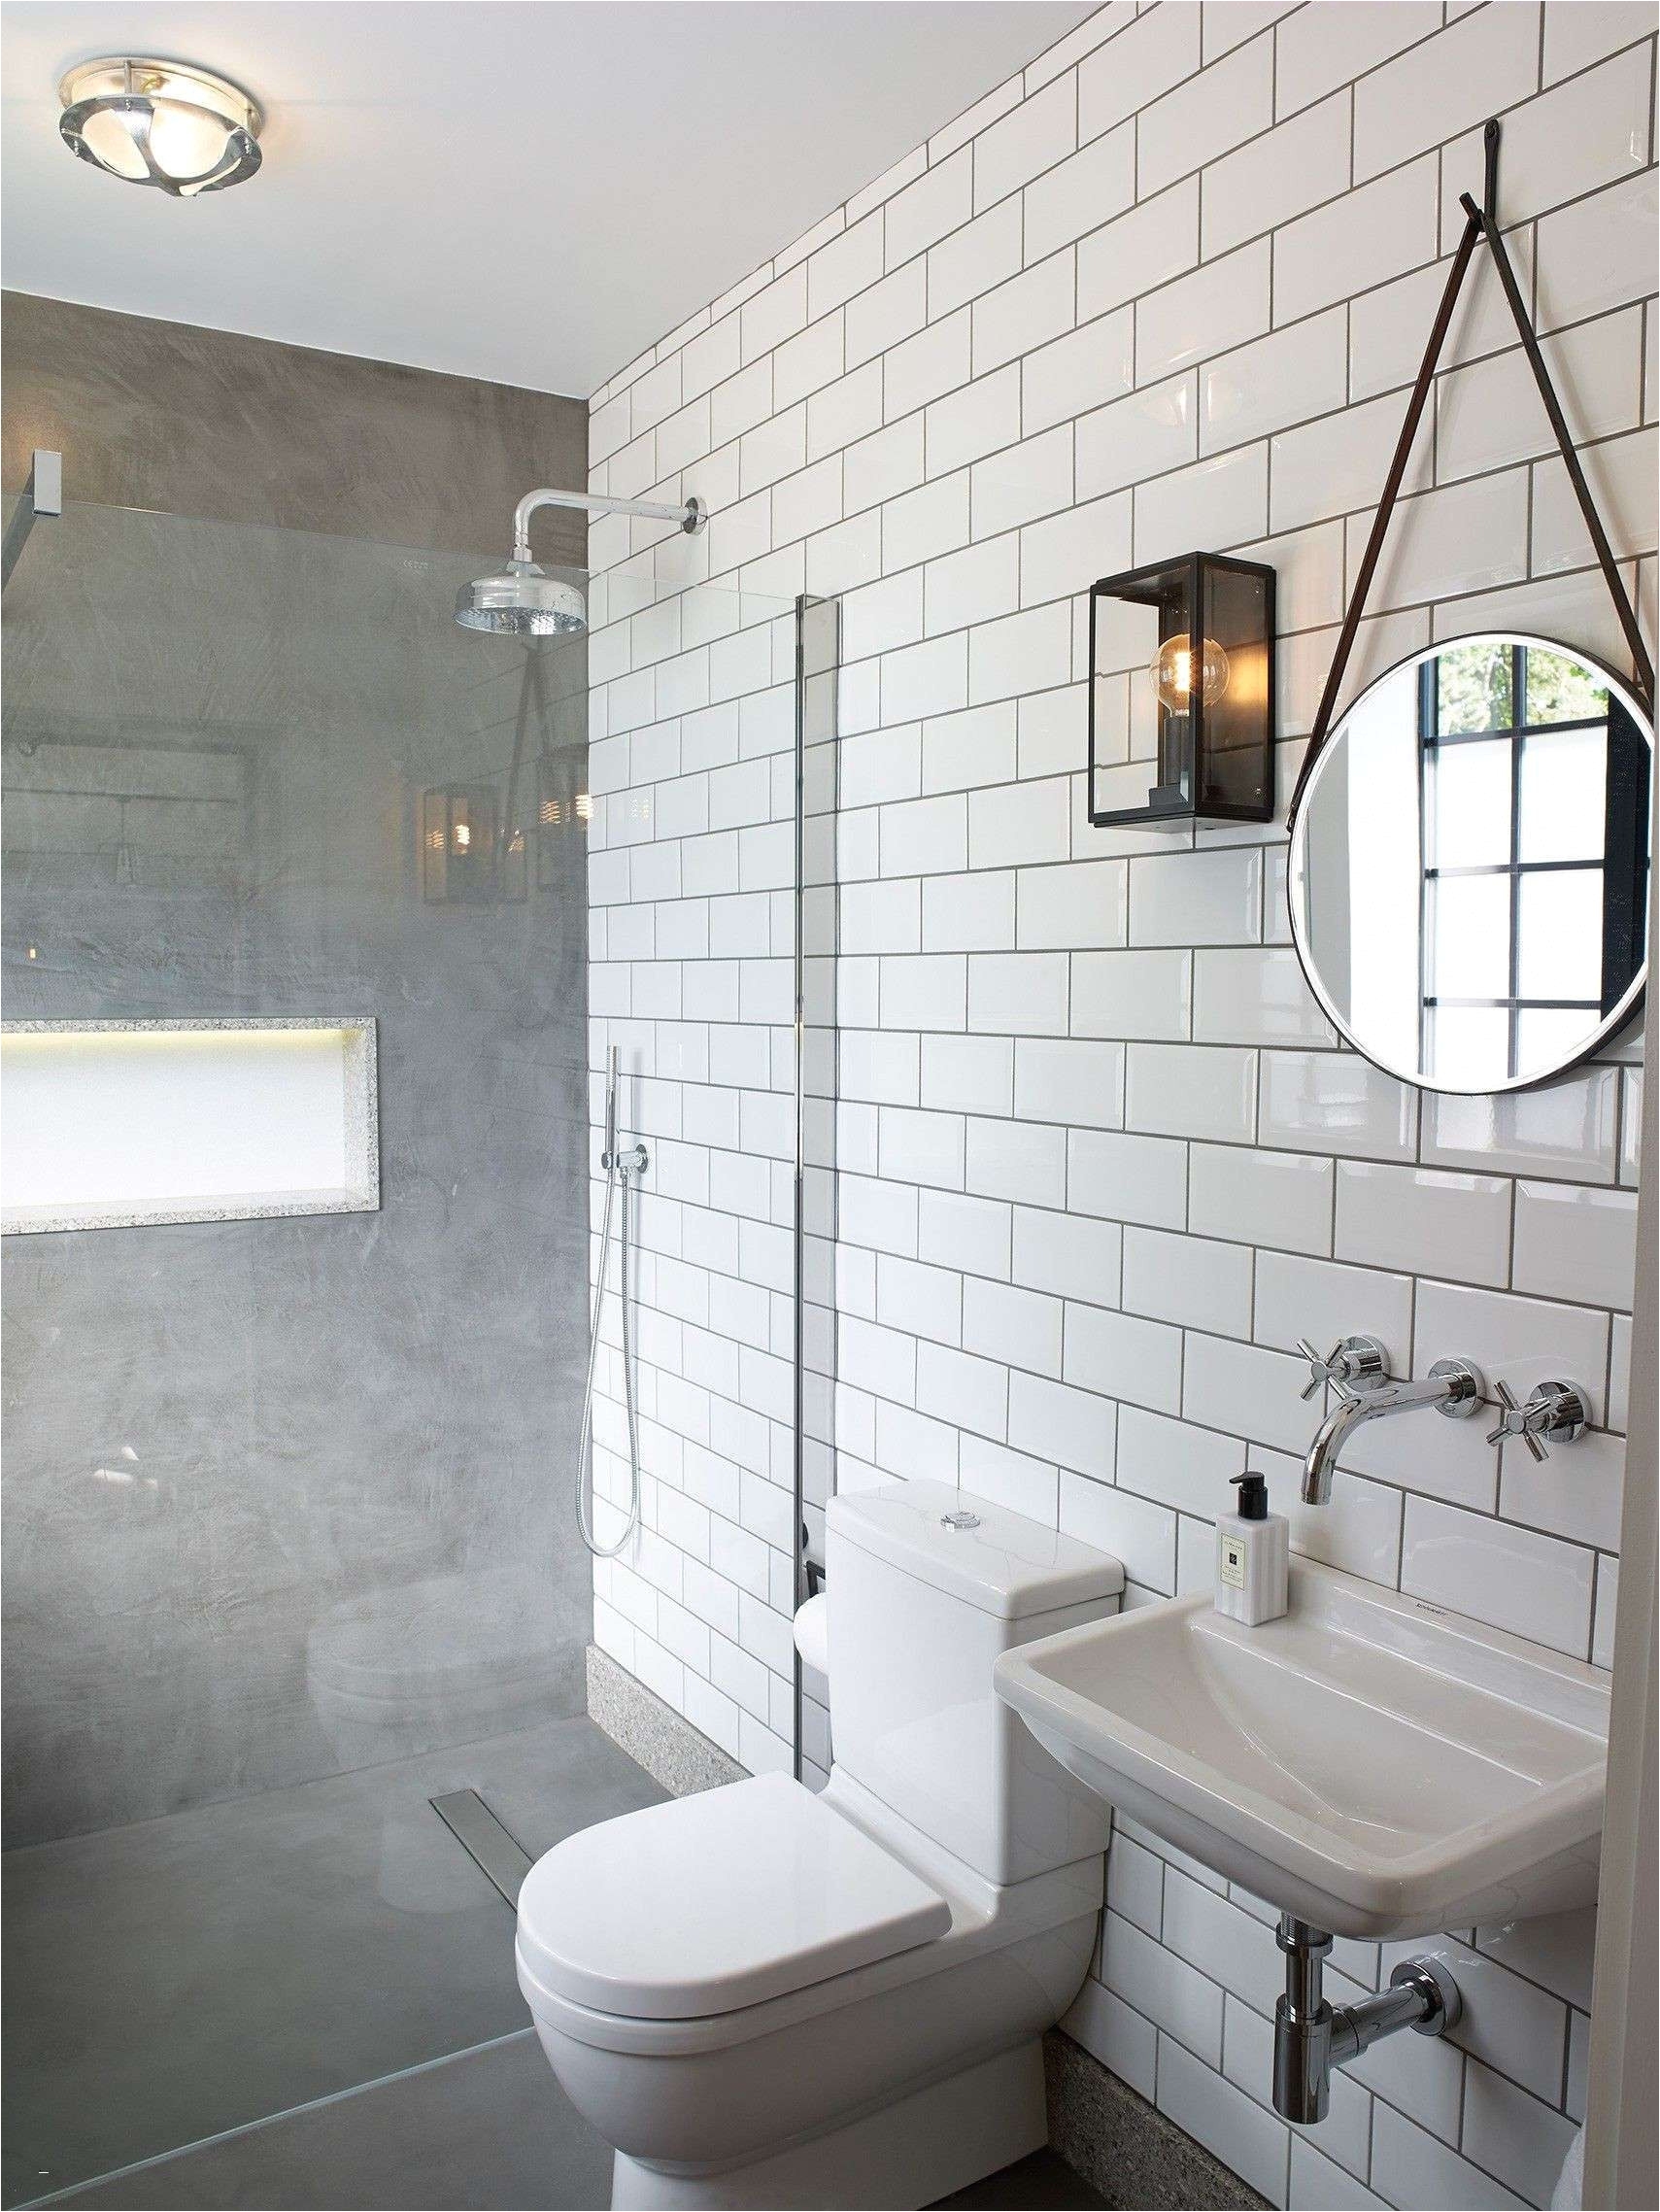 wonderful vanity light bar a· bathroom wall decor ideas incredible tag toilet ideas 0d mucsat design gorgeous 48 inch